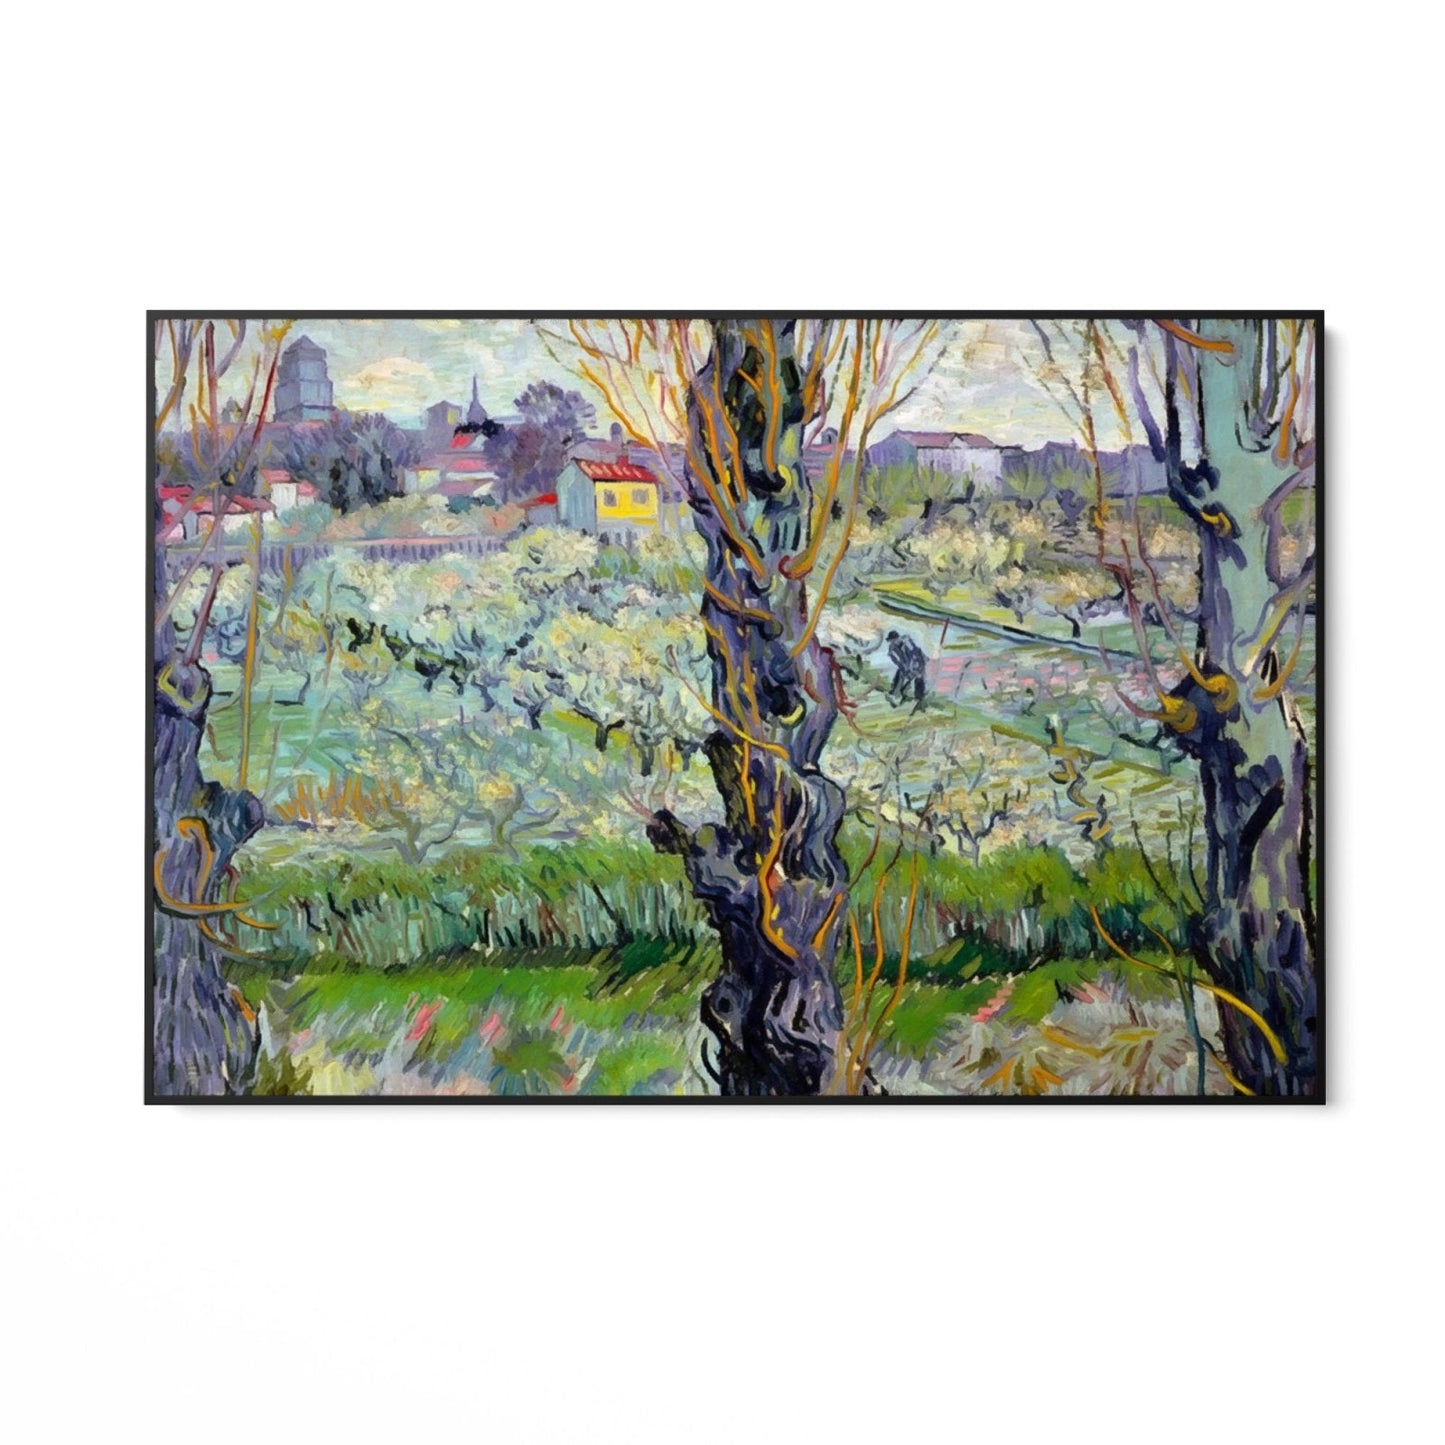 Näkymä Arlesiin, Vincent Van Gogh